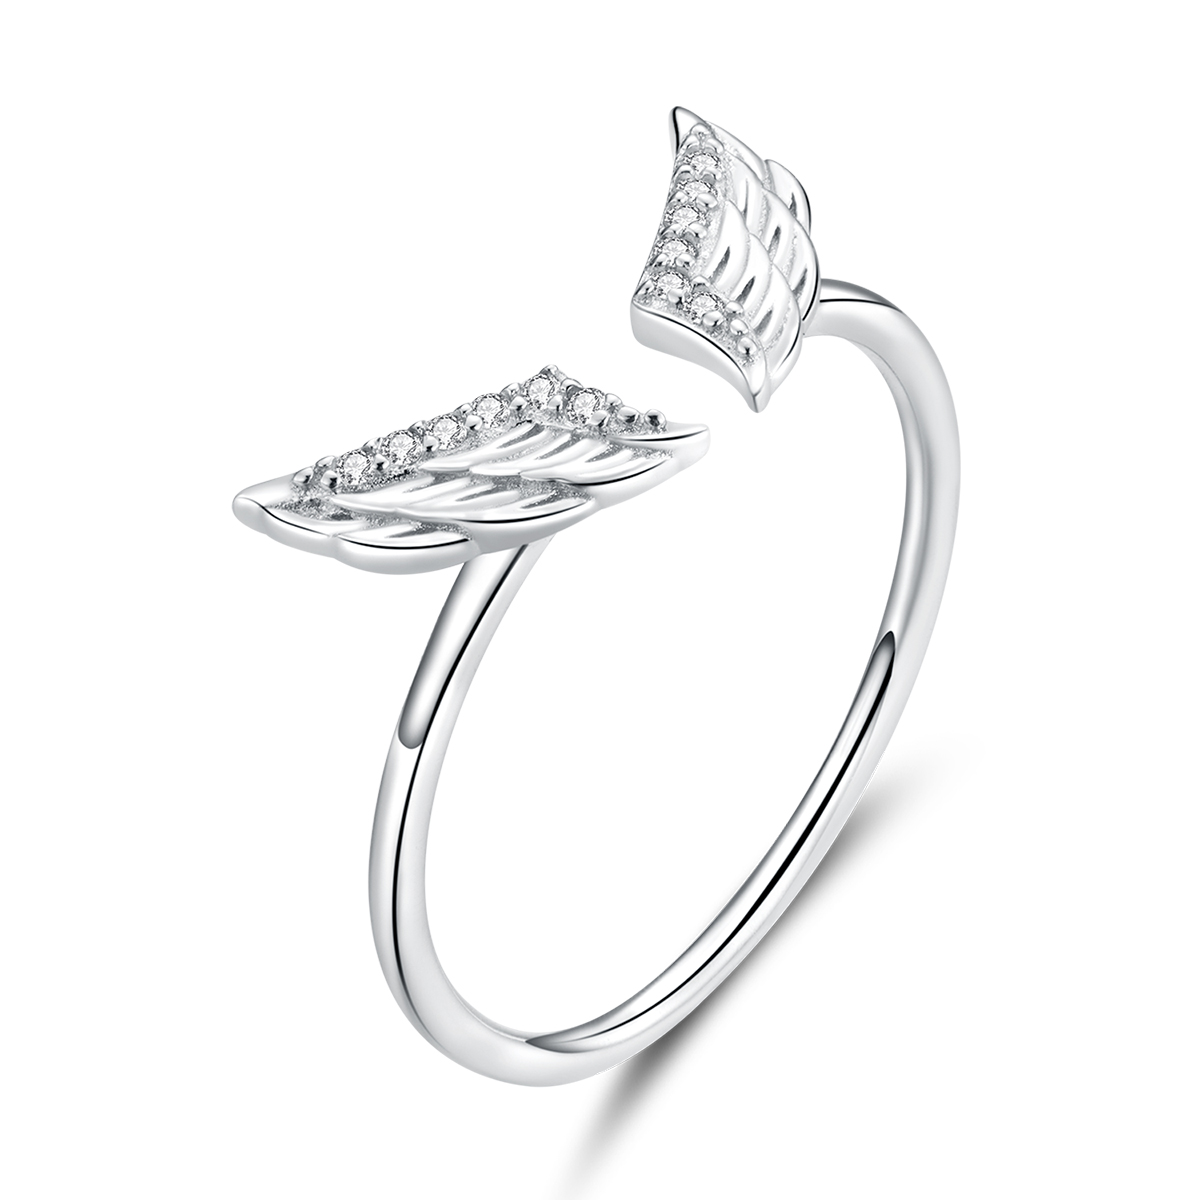 E-shop Linda's Jewelry Strieborný prsteň Anjelská Krídla Ag 925/1000 IPR067